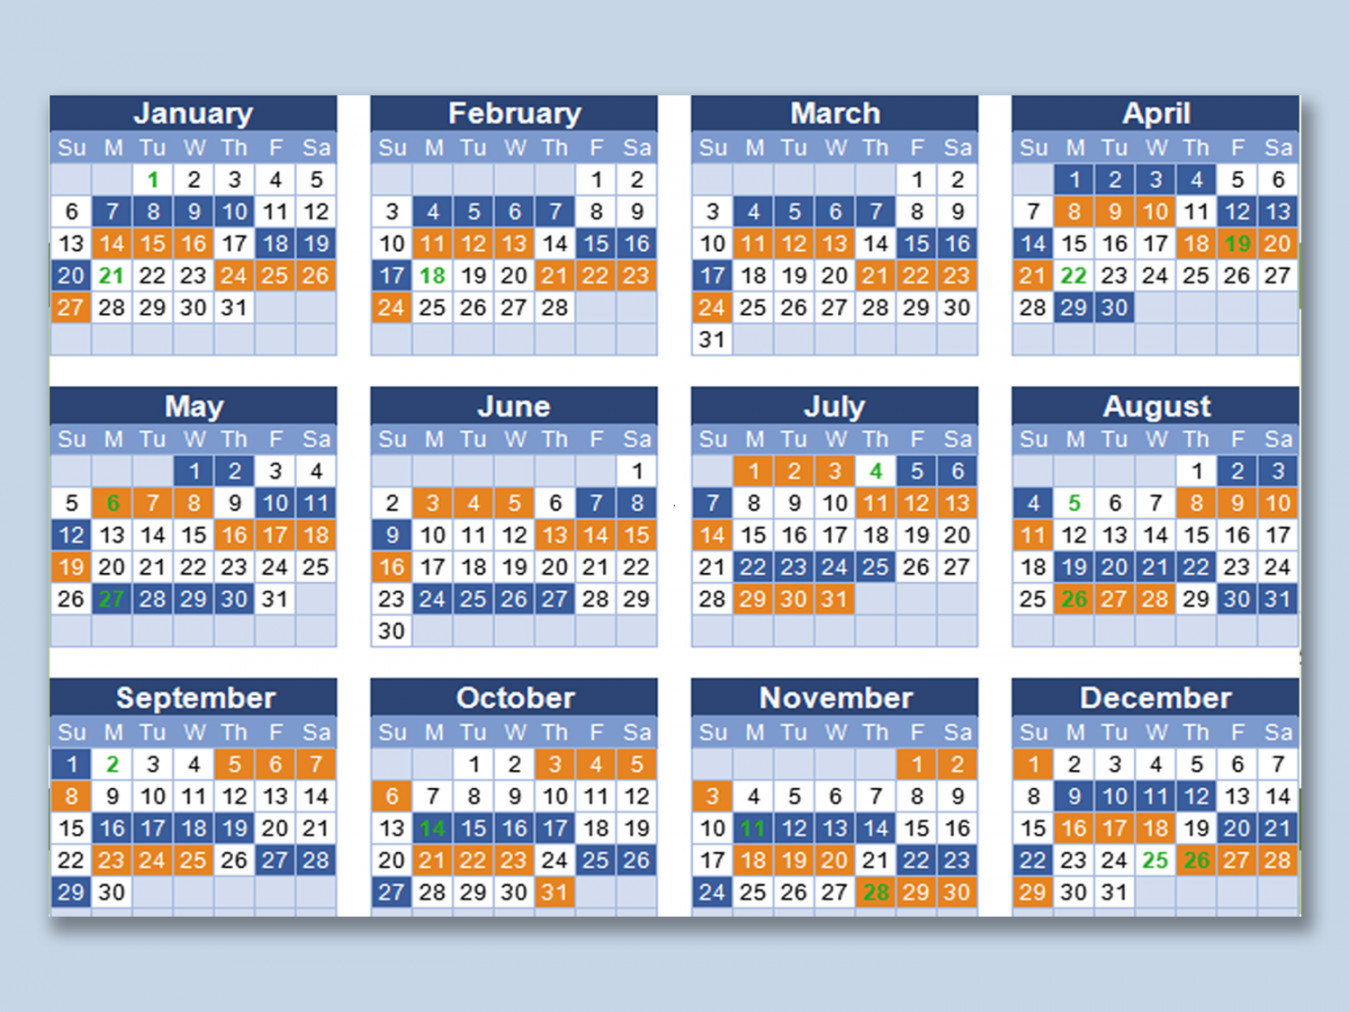 EXCEL of Shift Work Calendar